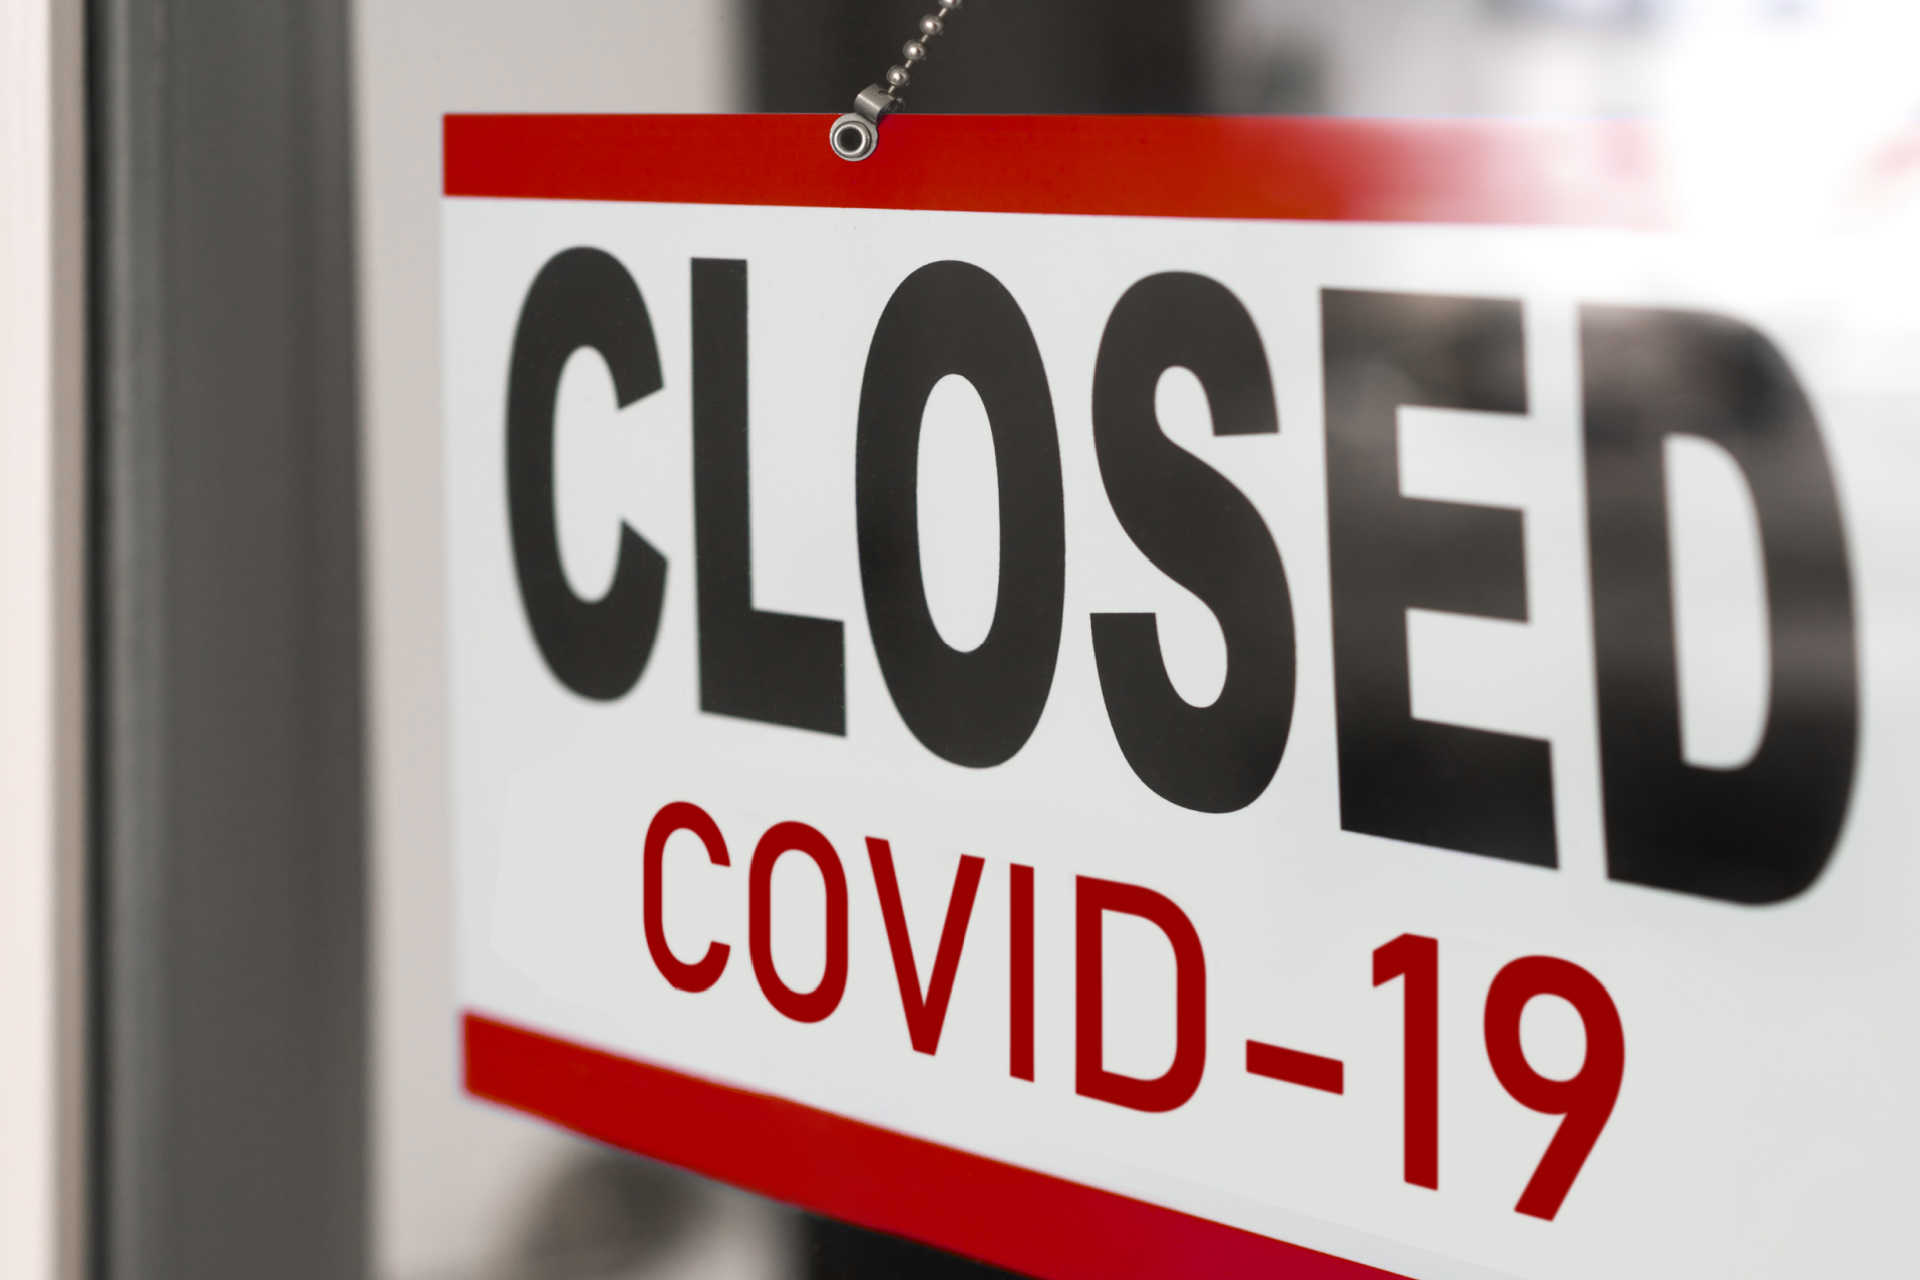 COVID-19 Client Alert - Business Interruption Insurance